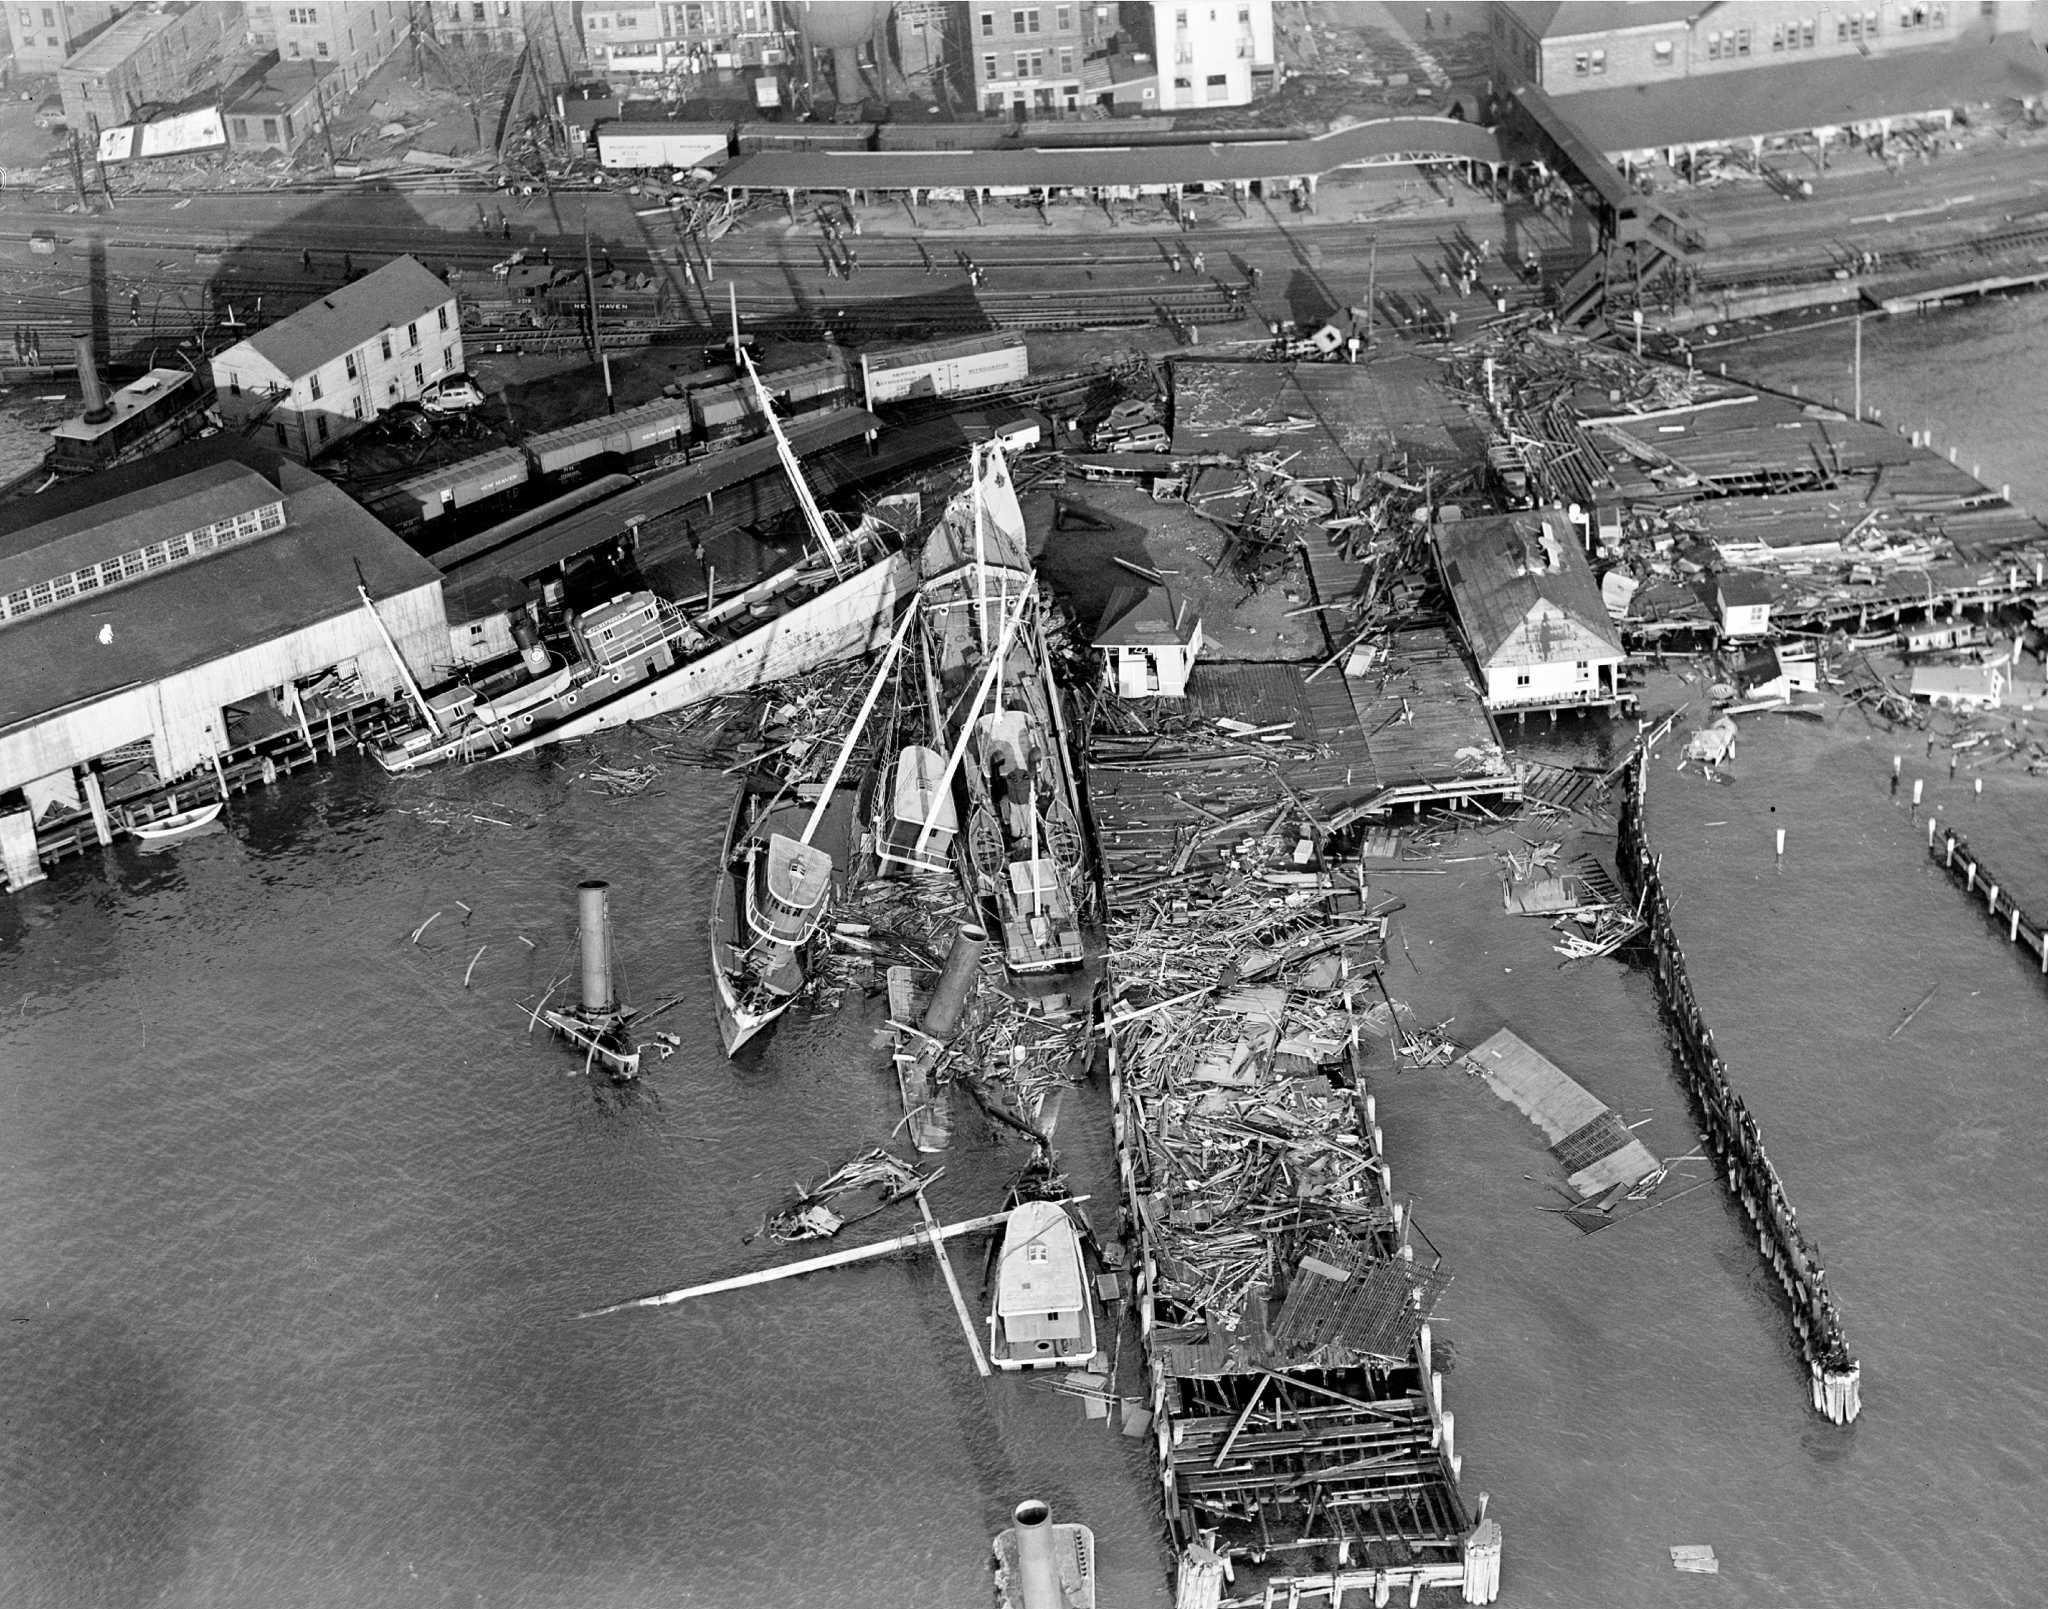 77 years ago, devastating hurricane struck region